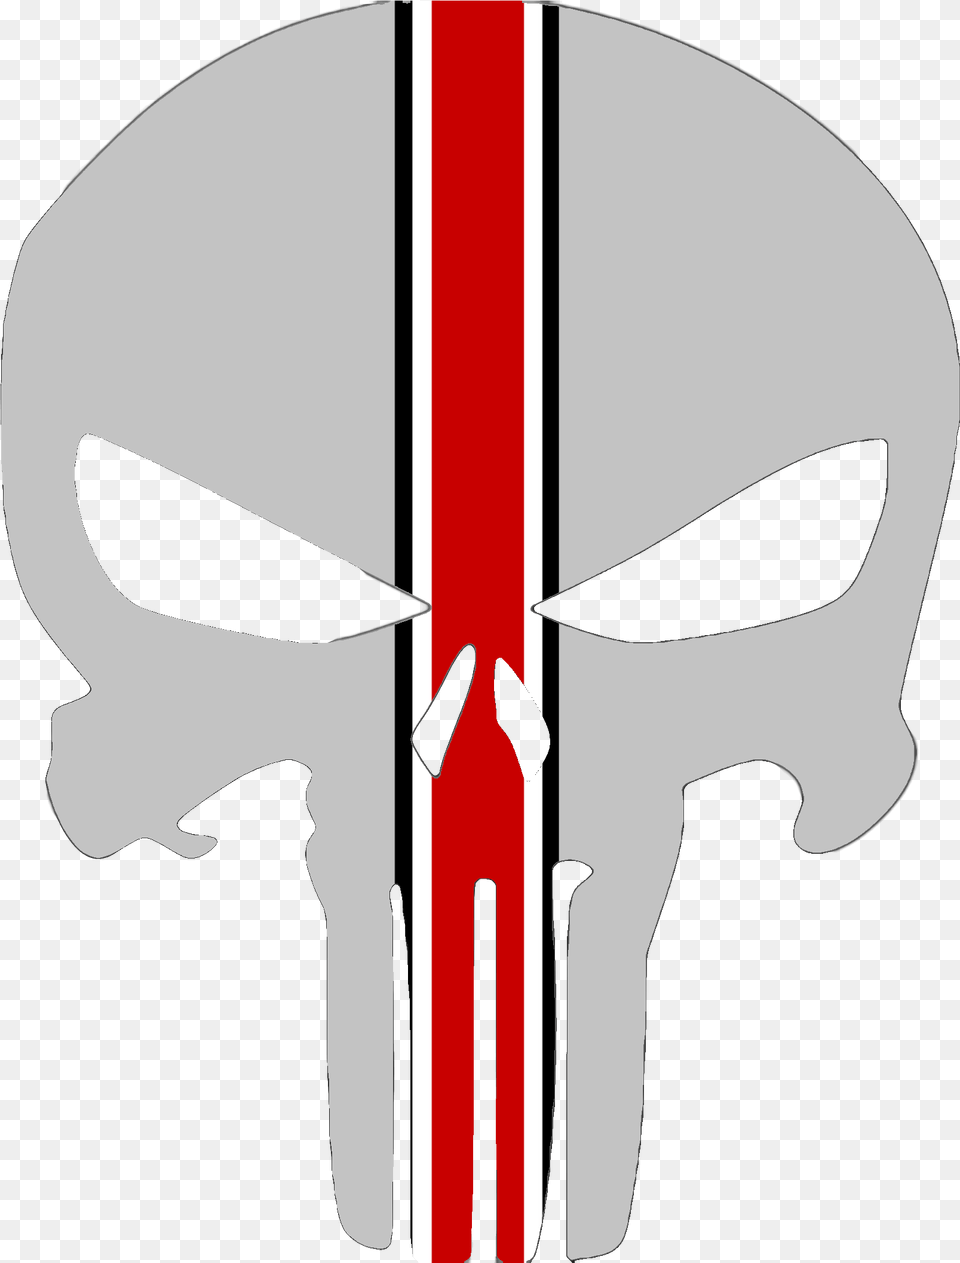 Skull Buck Eye Stripe Punisher Skull Red, Cross, Symbol, Clothing, Footwear Png Image